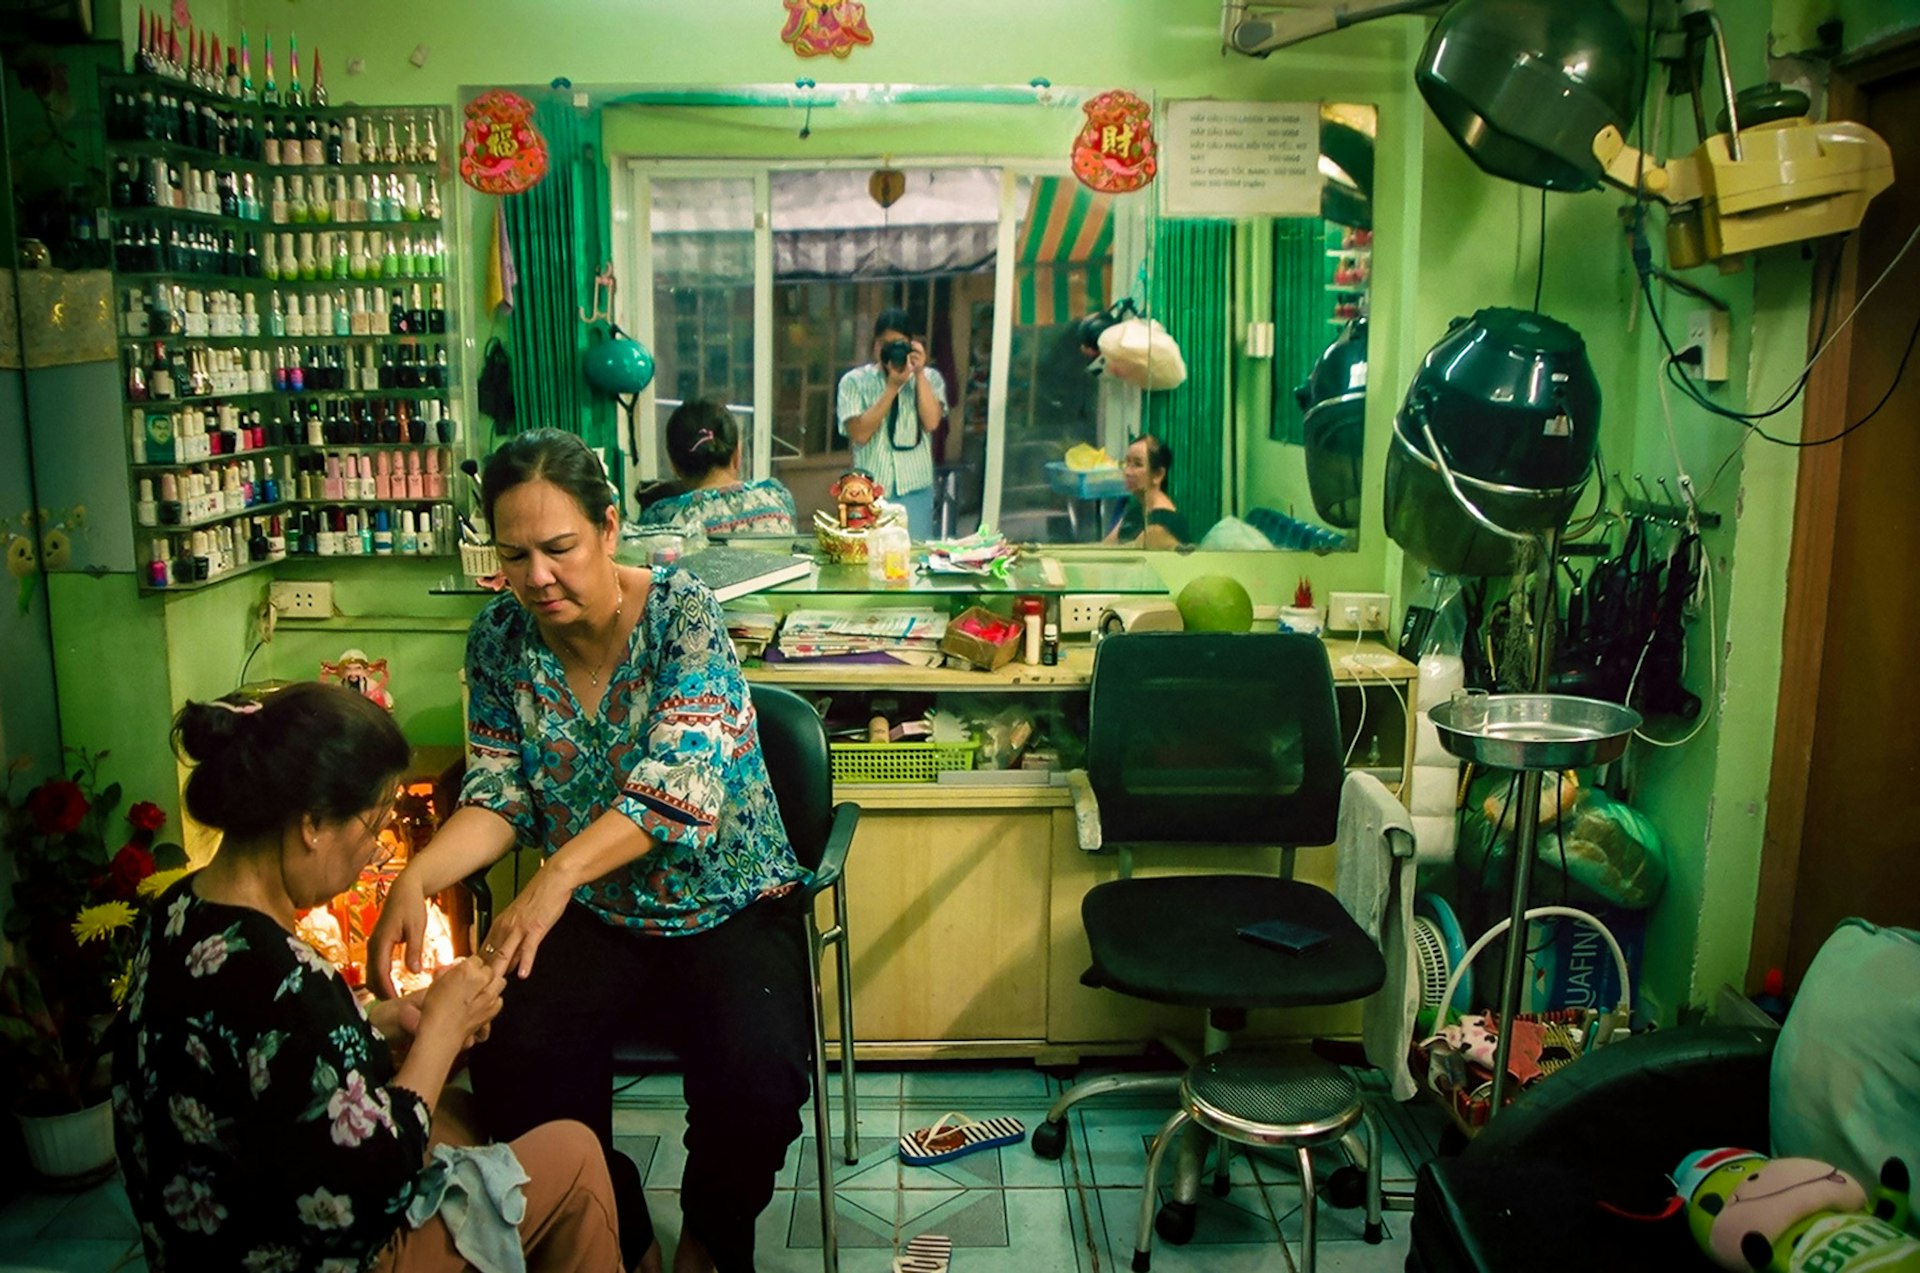 An intimate portrait of Vietnam half a century after the war